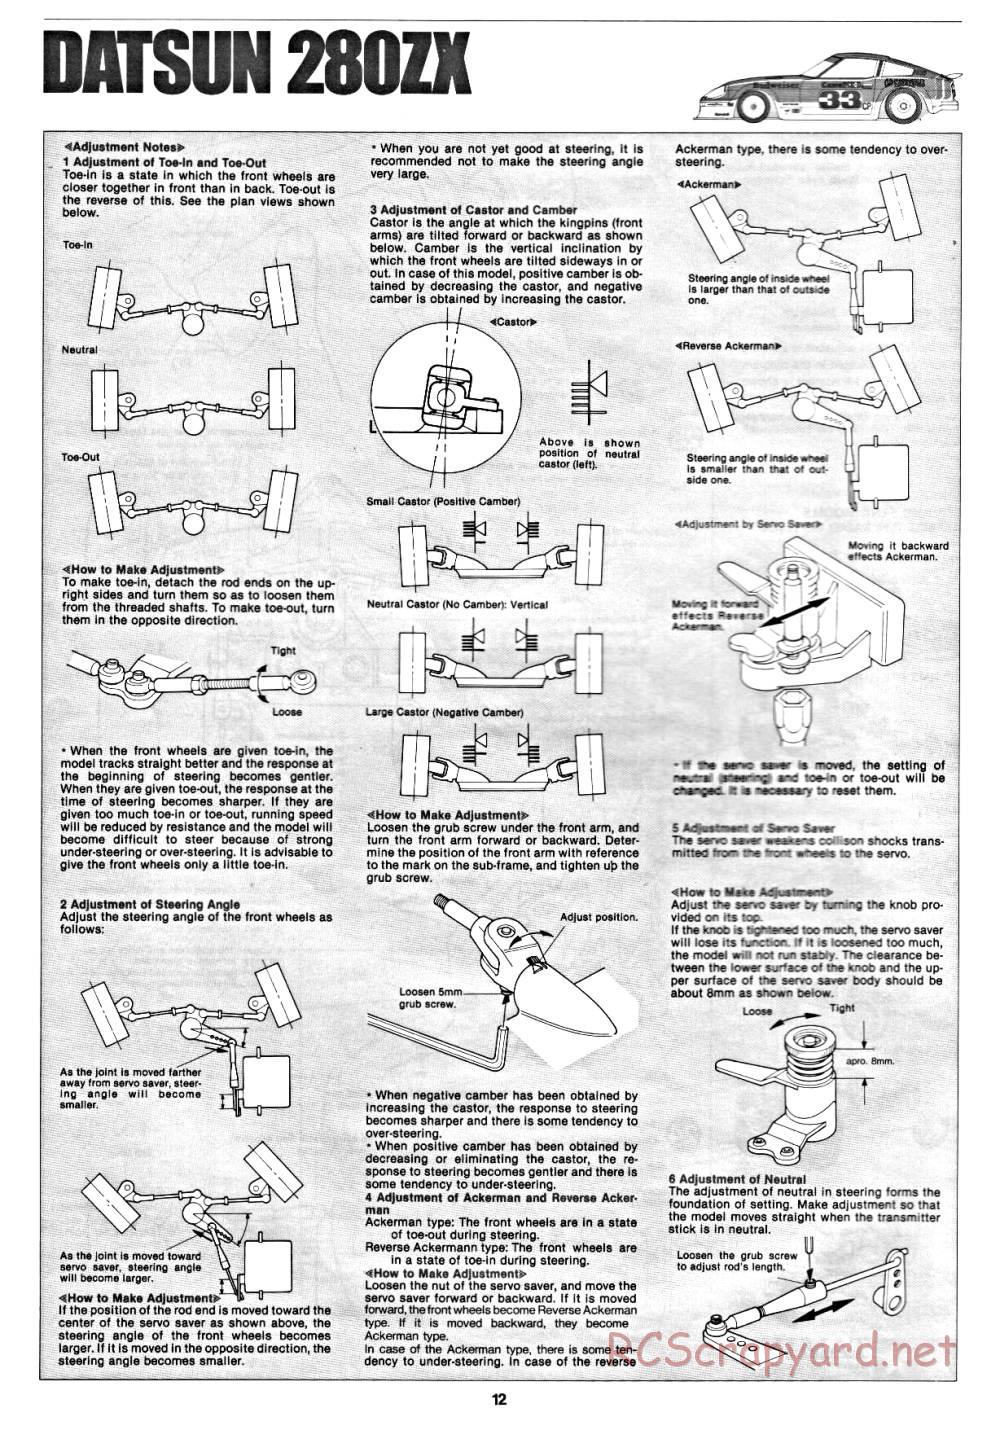 Tamiya - Datsun 280ZX - 58022 - Manual - Page 12